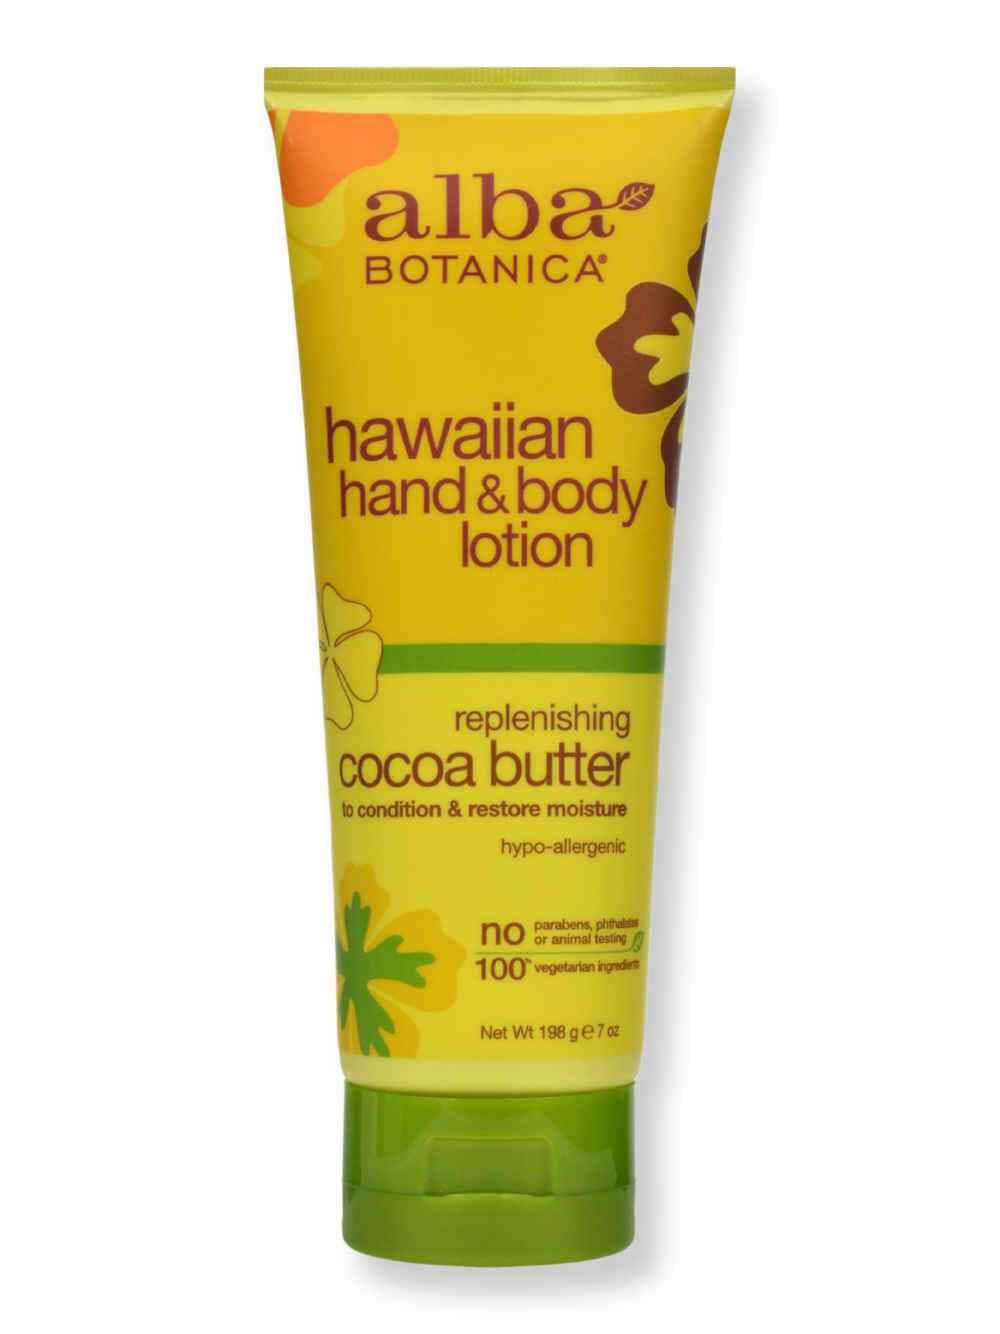 Alba Botanica Alba Botanica Hawaiian Hand & Body Lotion Cocoa Butter 7 oz Body Lotions & Oils 